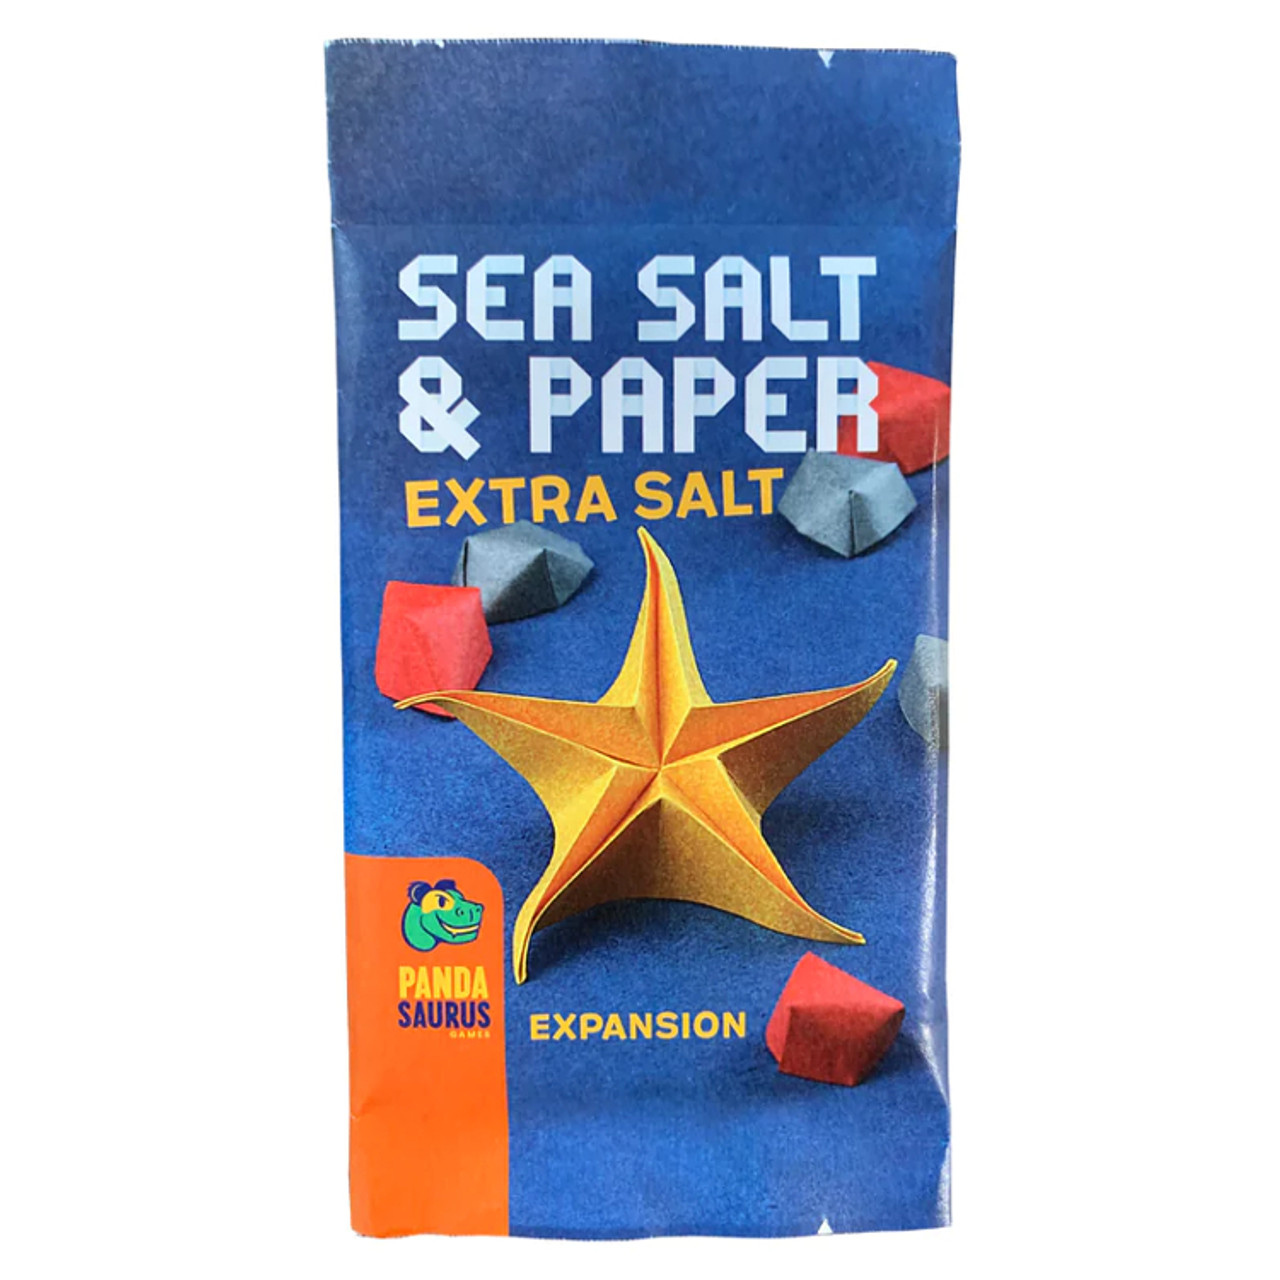 SEA SALT & PAPER: EXTRA SALT and EXTRA TOURNAMENT! - Board Game Arena